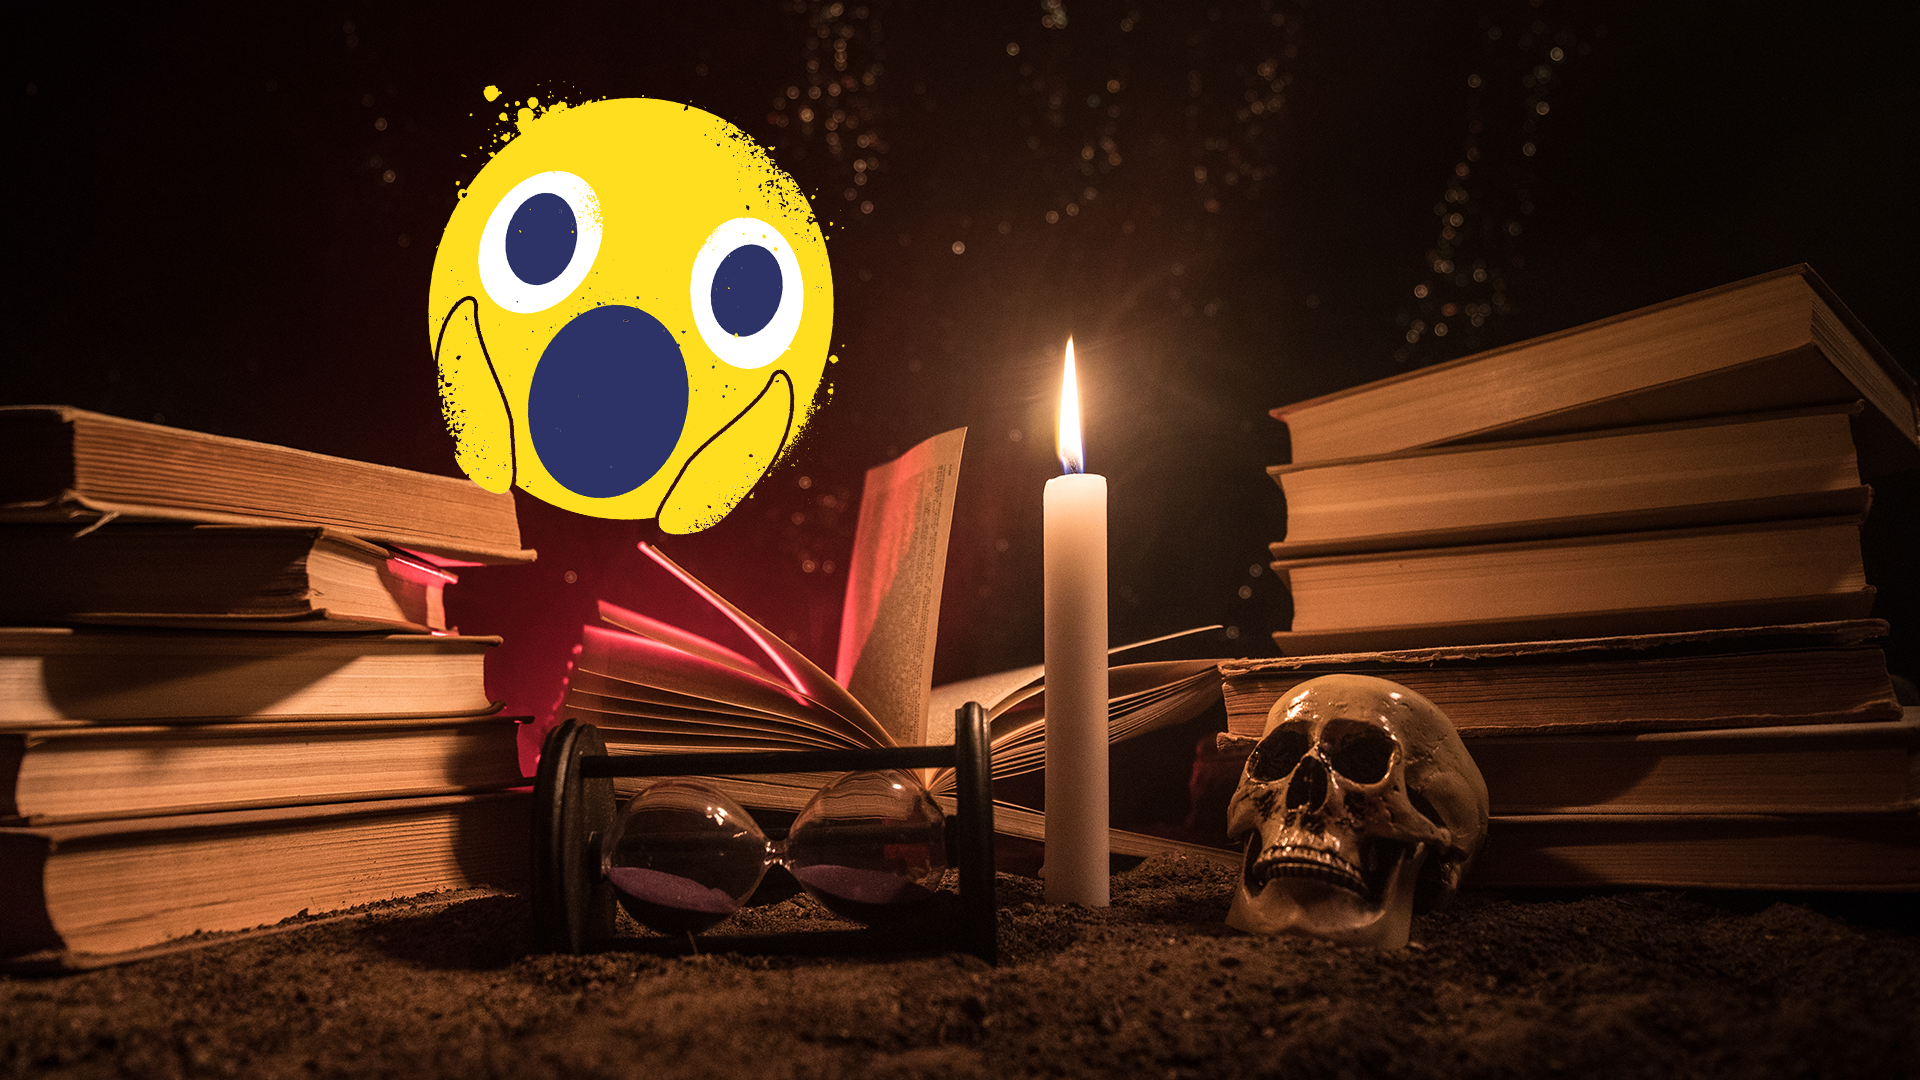 Creepy books and shocked emoji